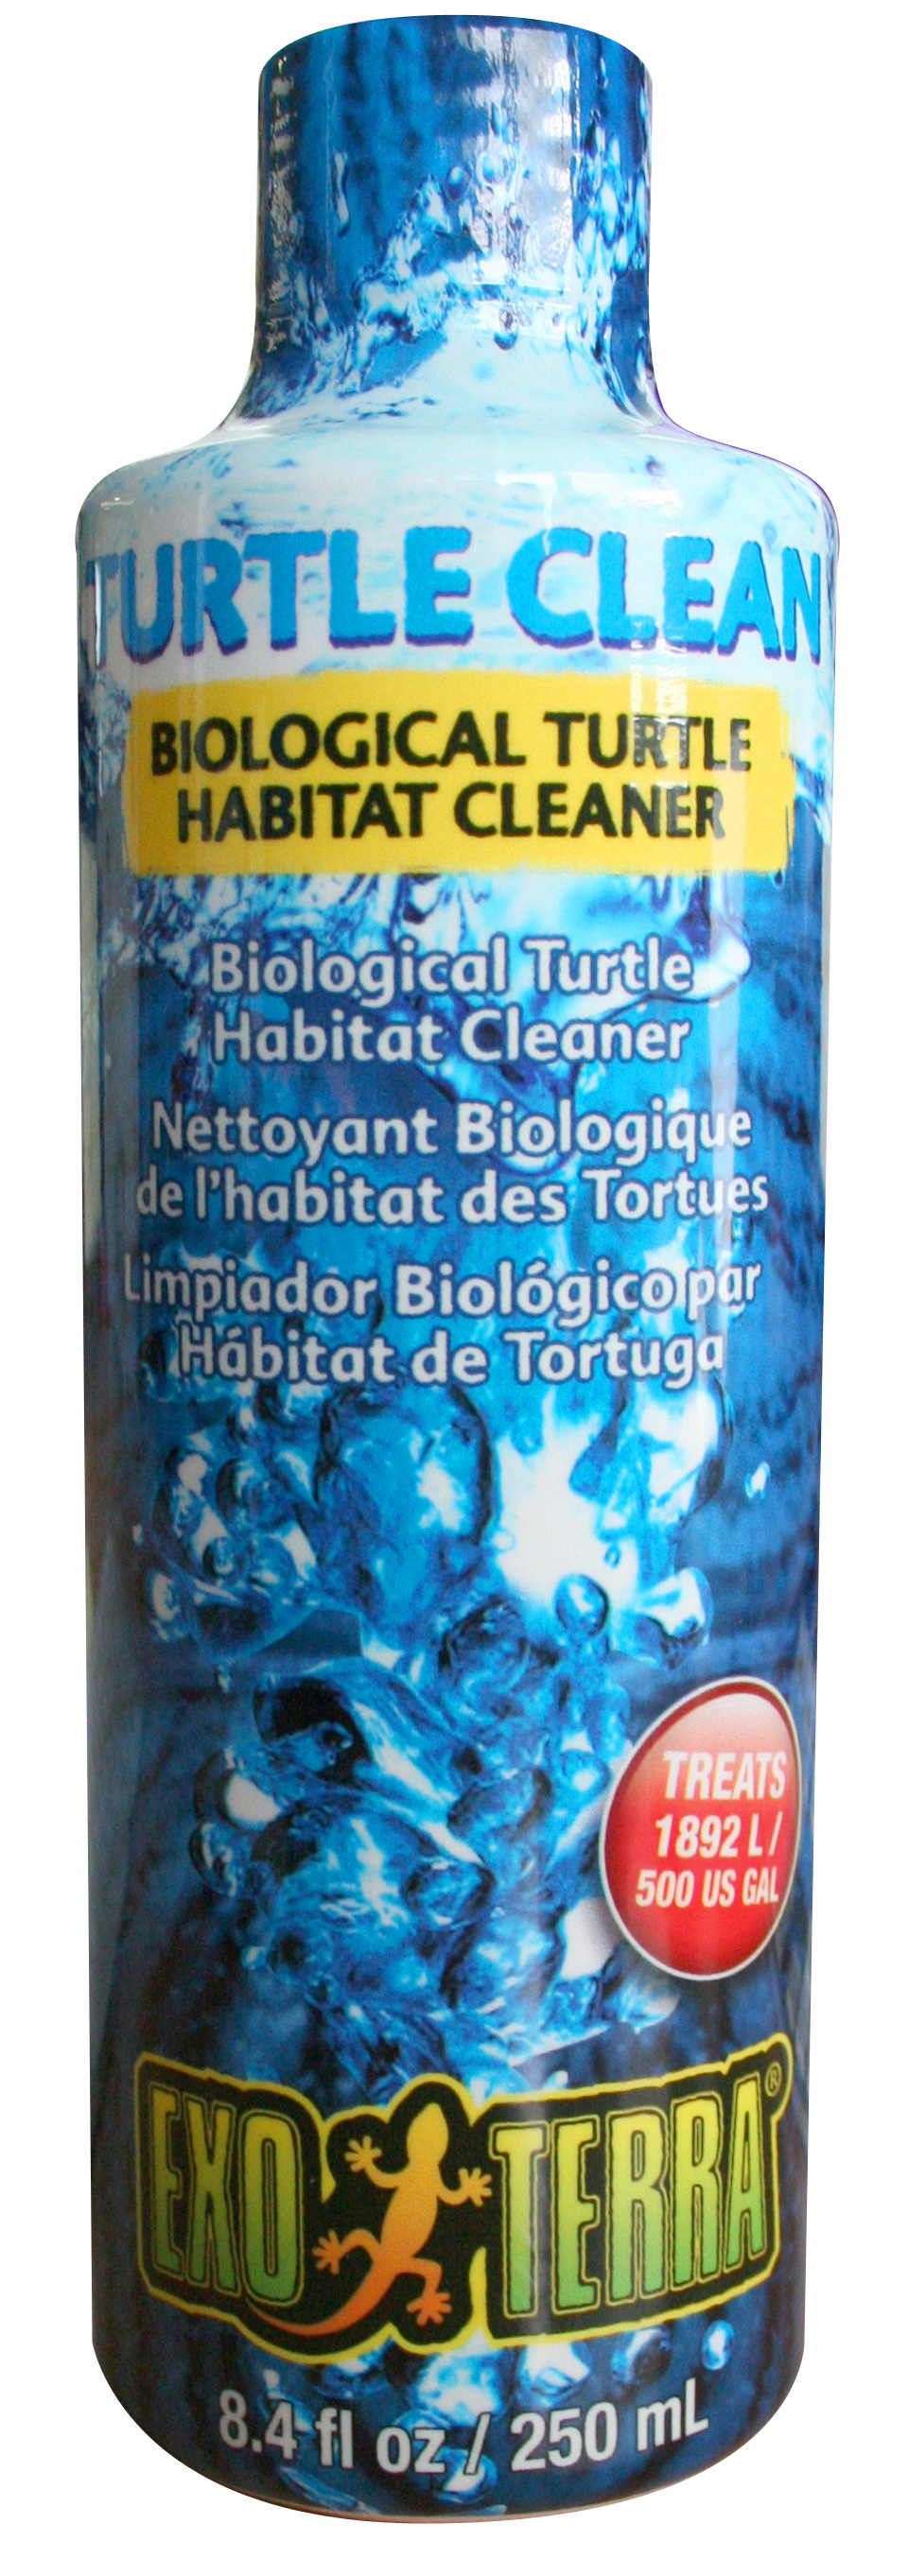 Ex turtle clean biol. habitat cleaner - Product shot